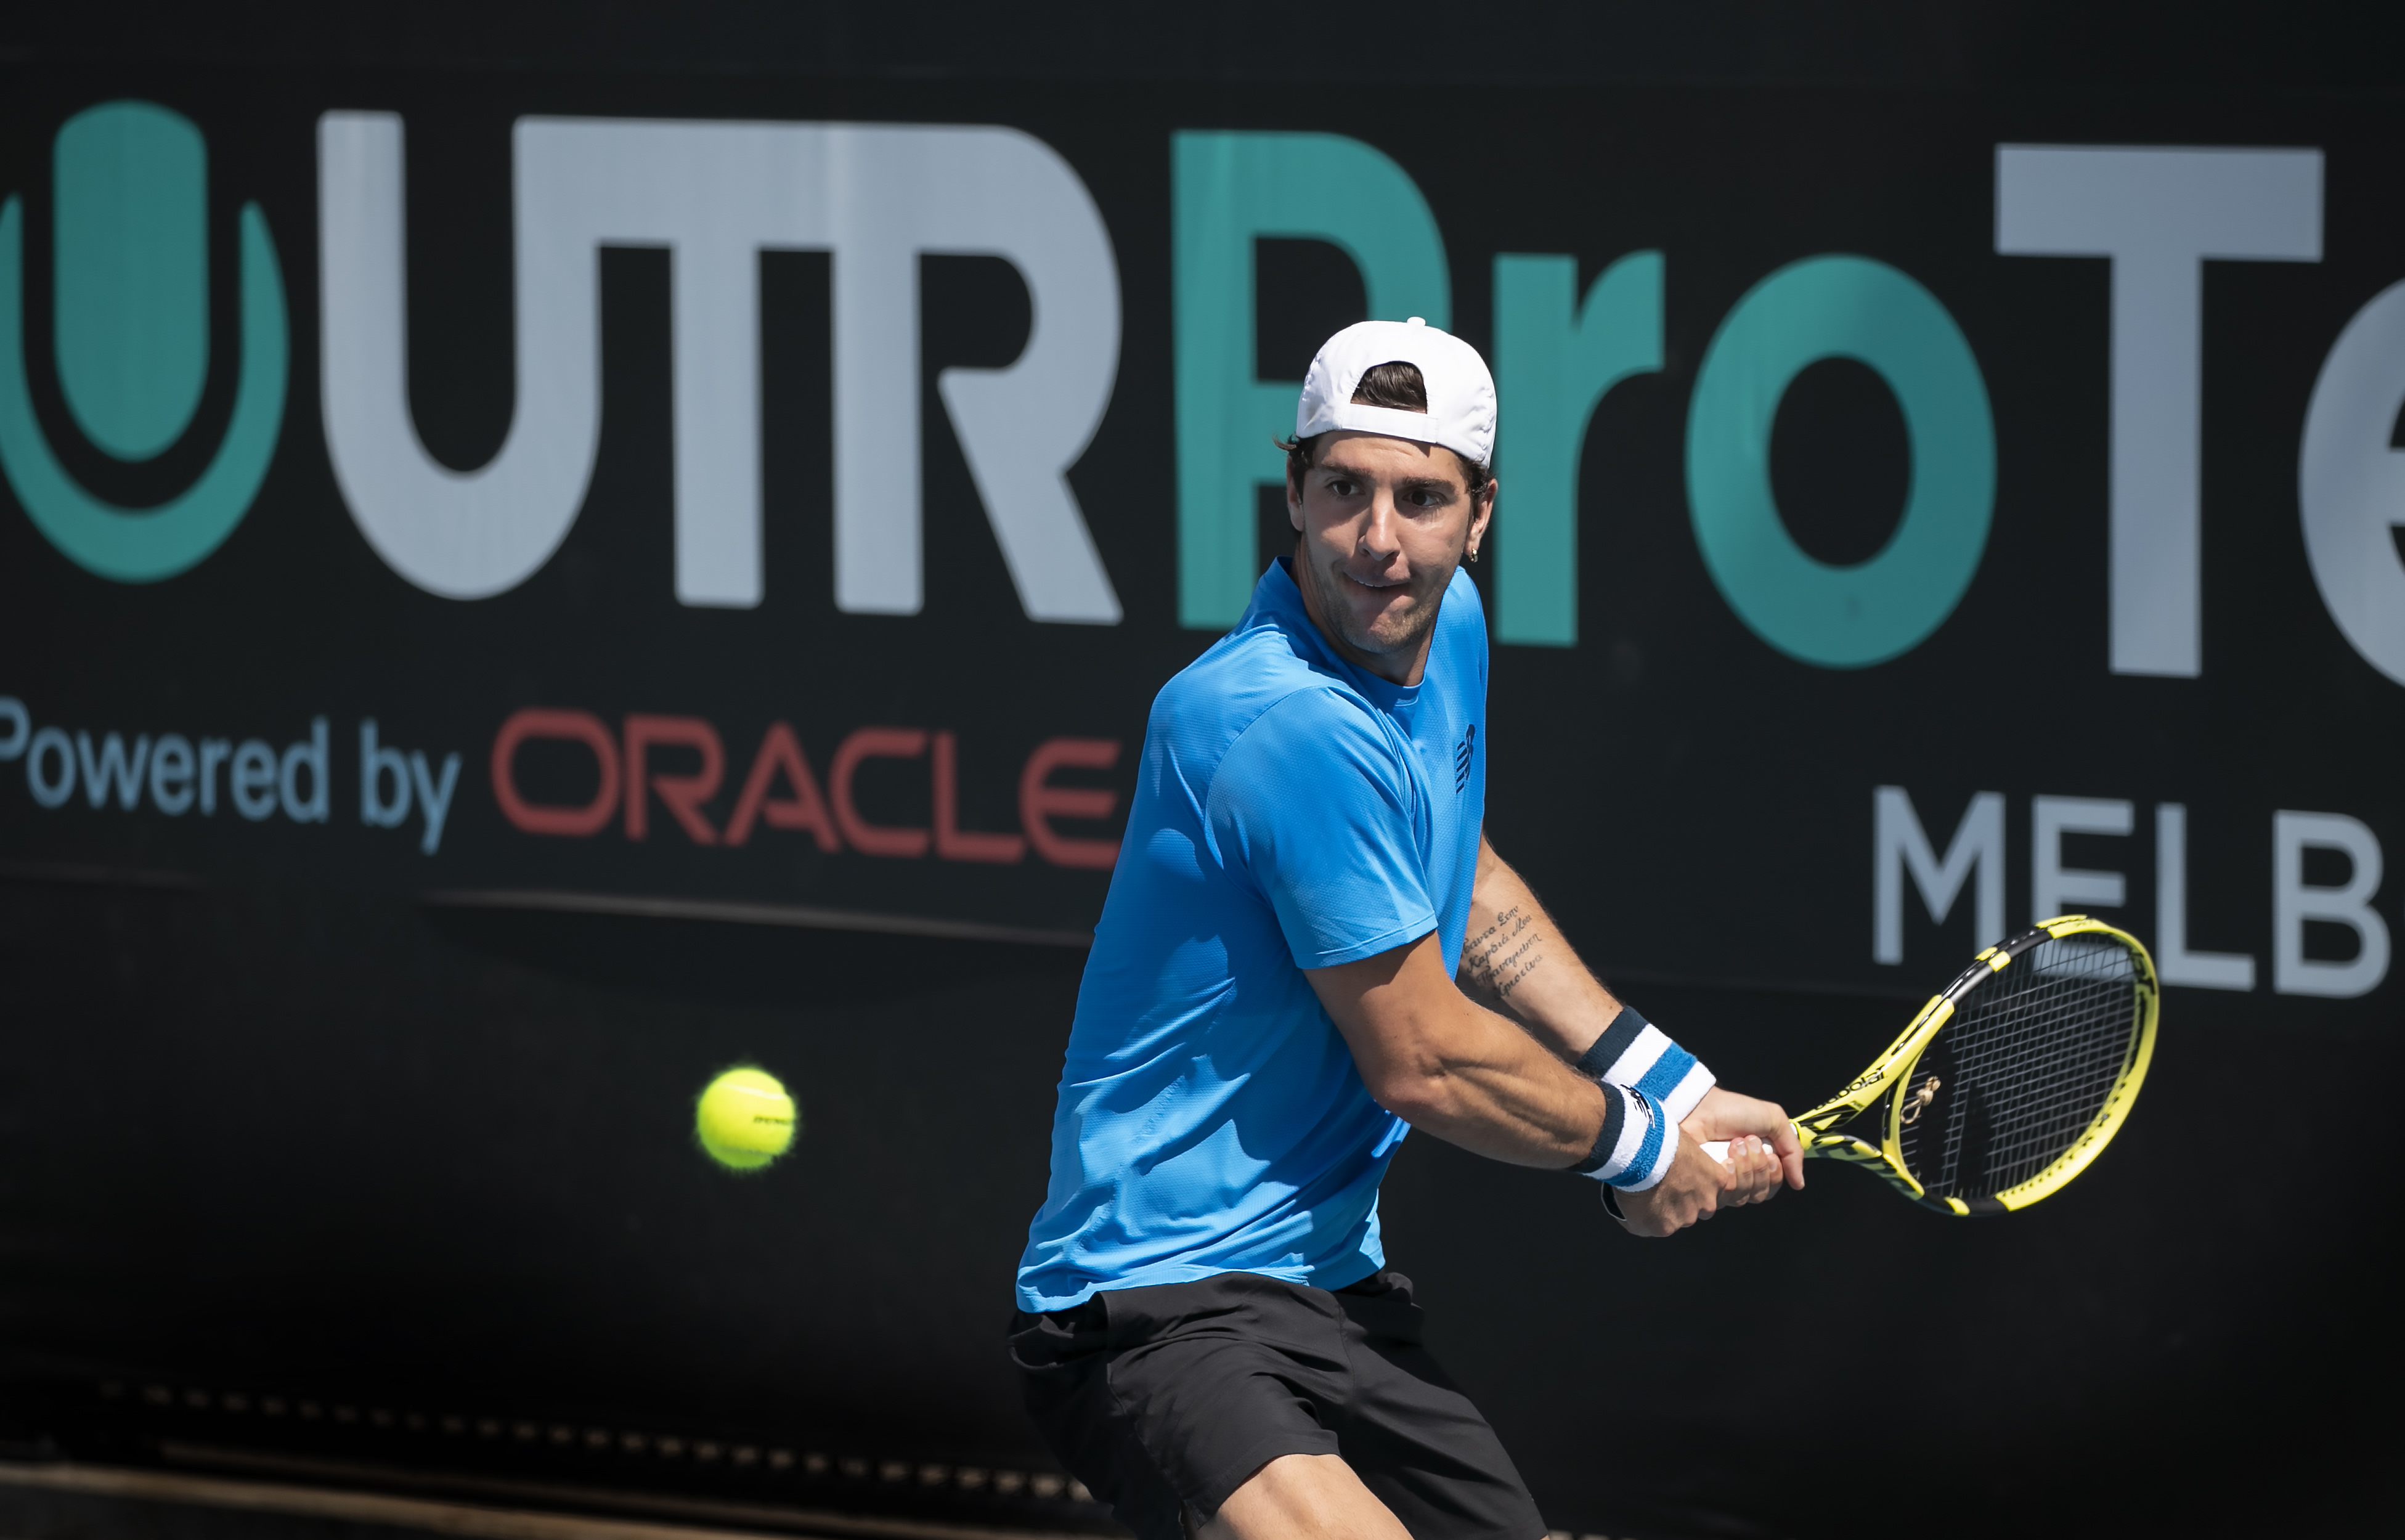 Universal Tennis launches UTR Pro Tennis Series Tour Tennis